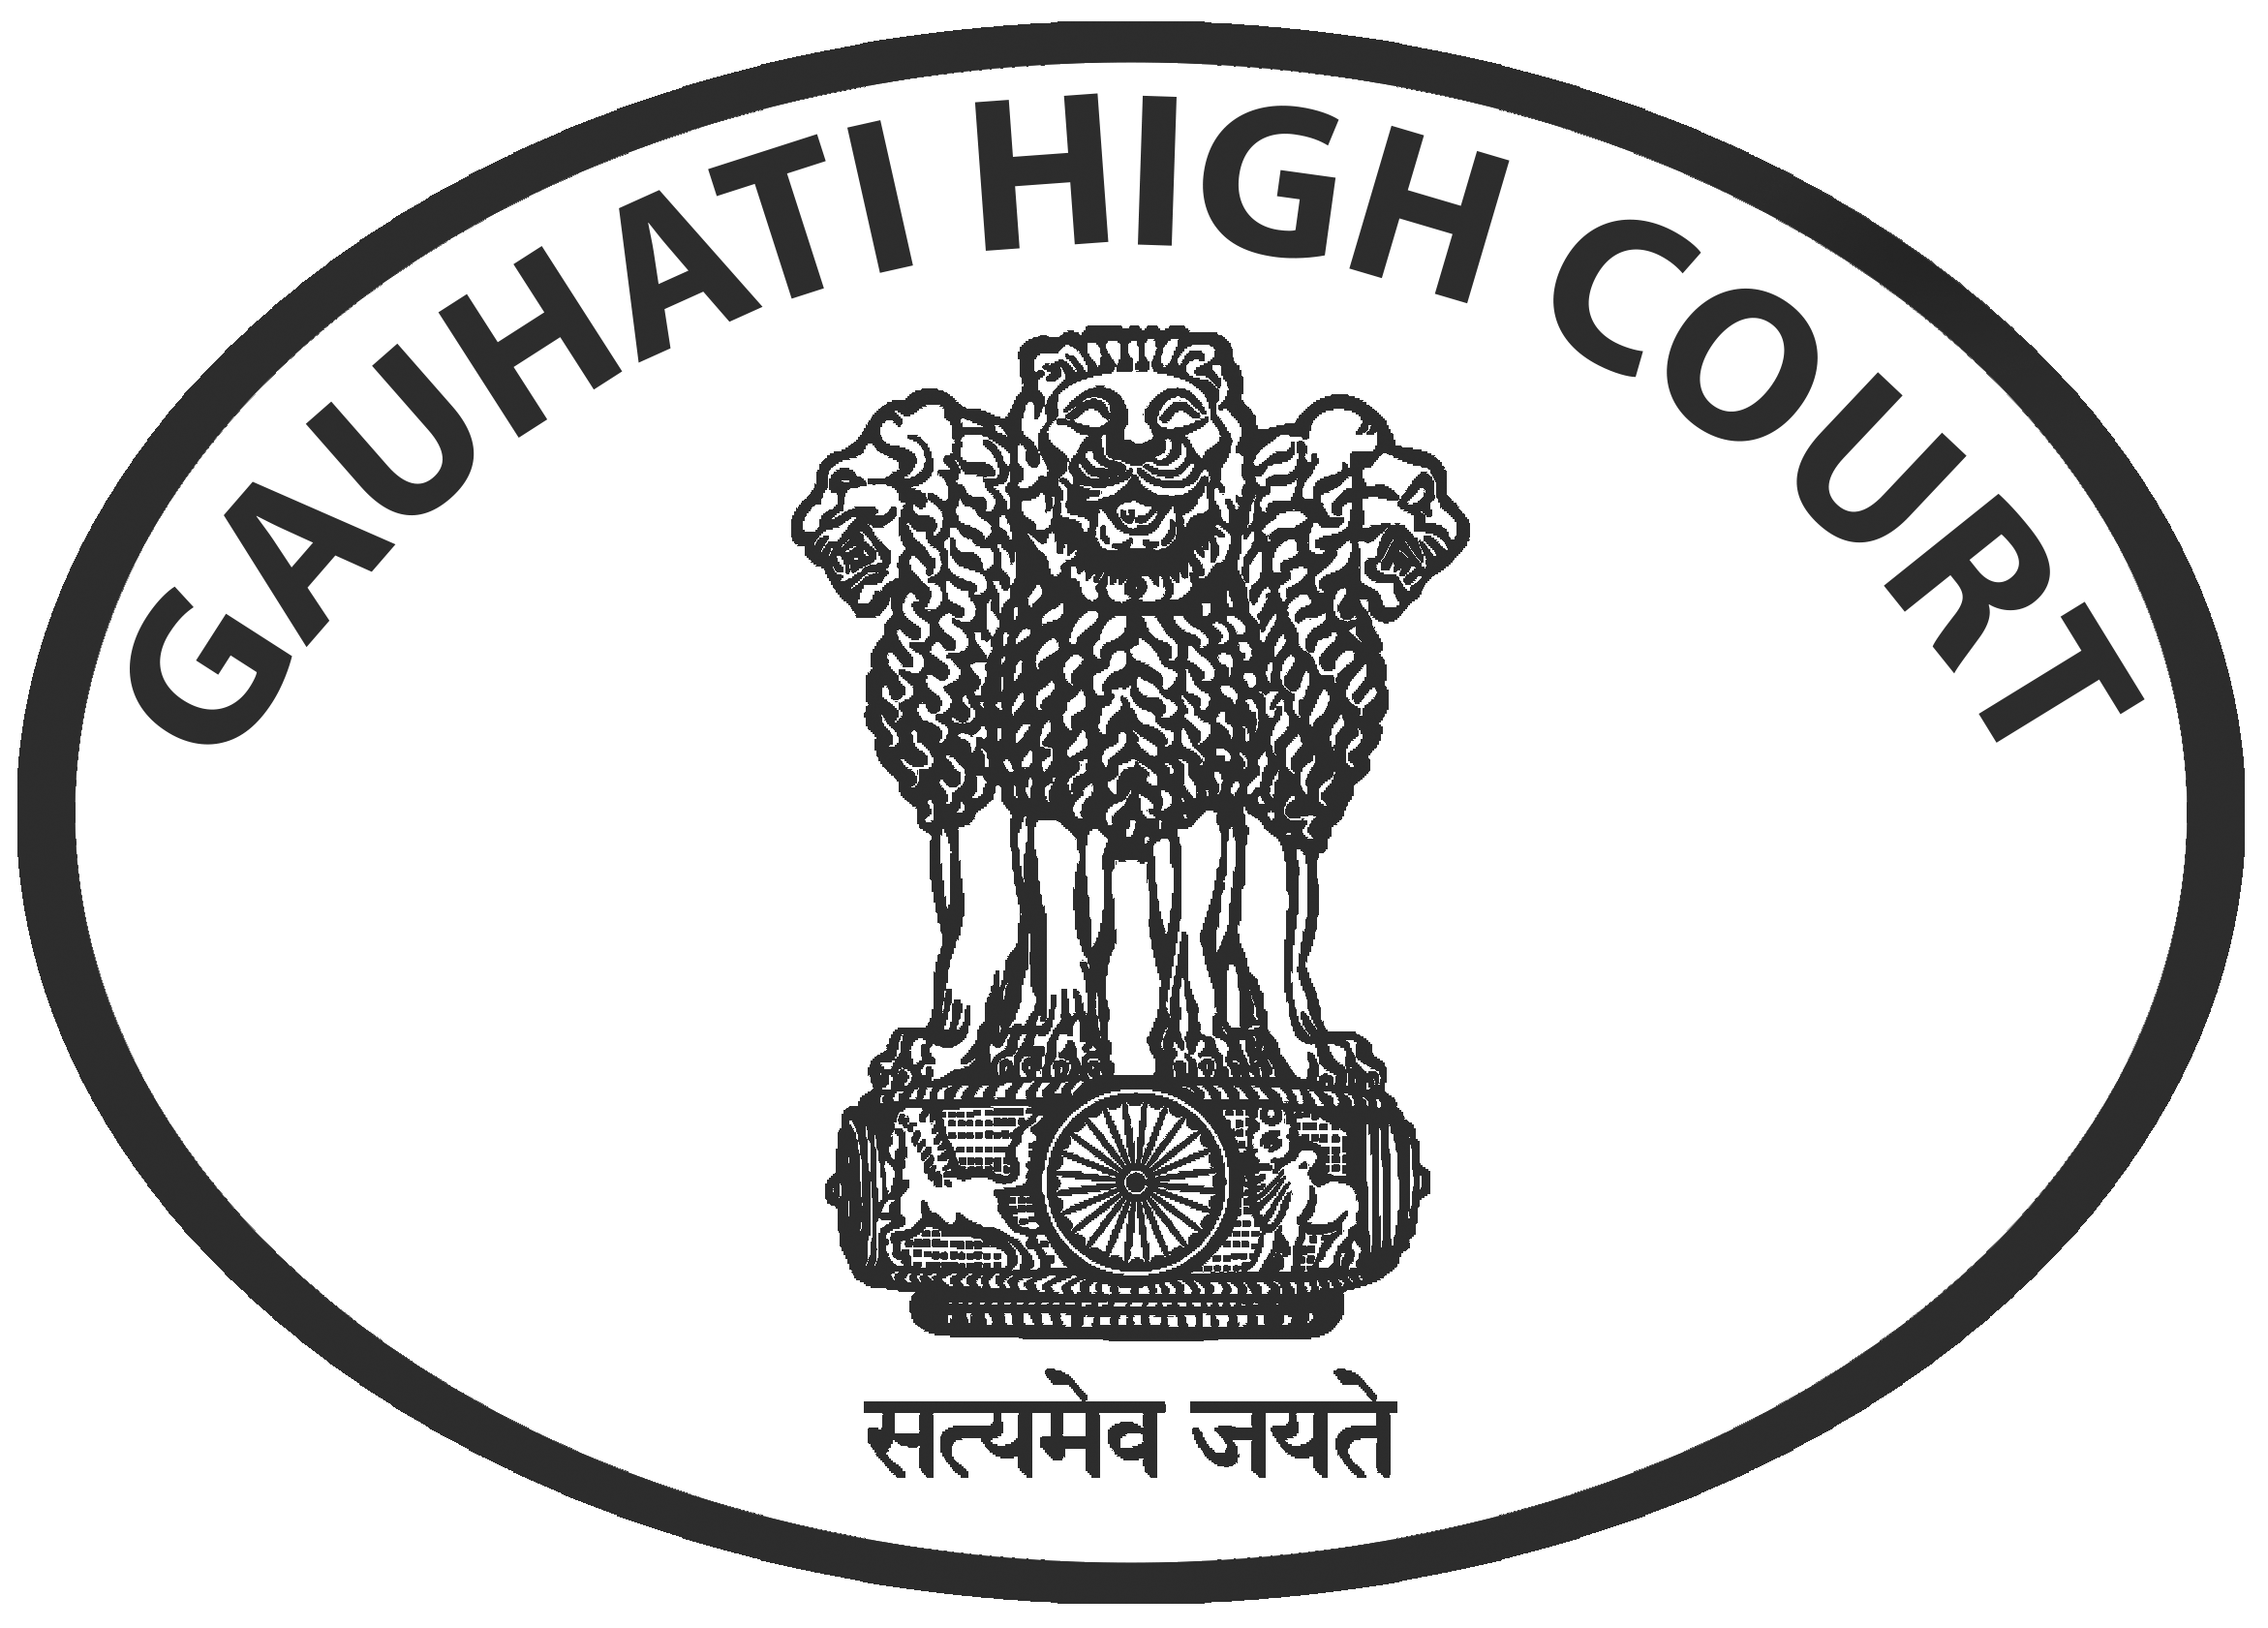 Gauhati high court logo